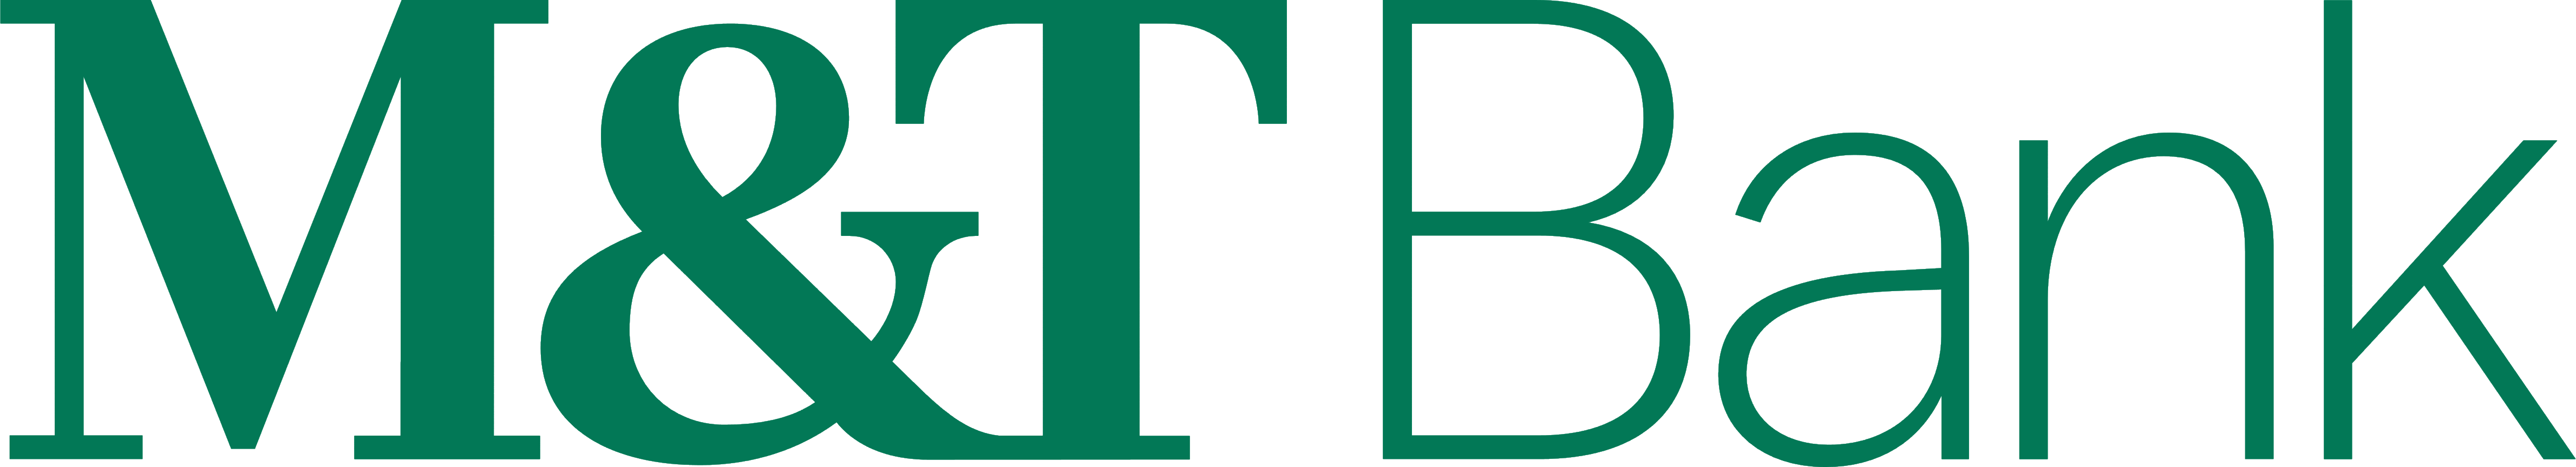 M&T Bank Logo